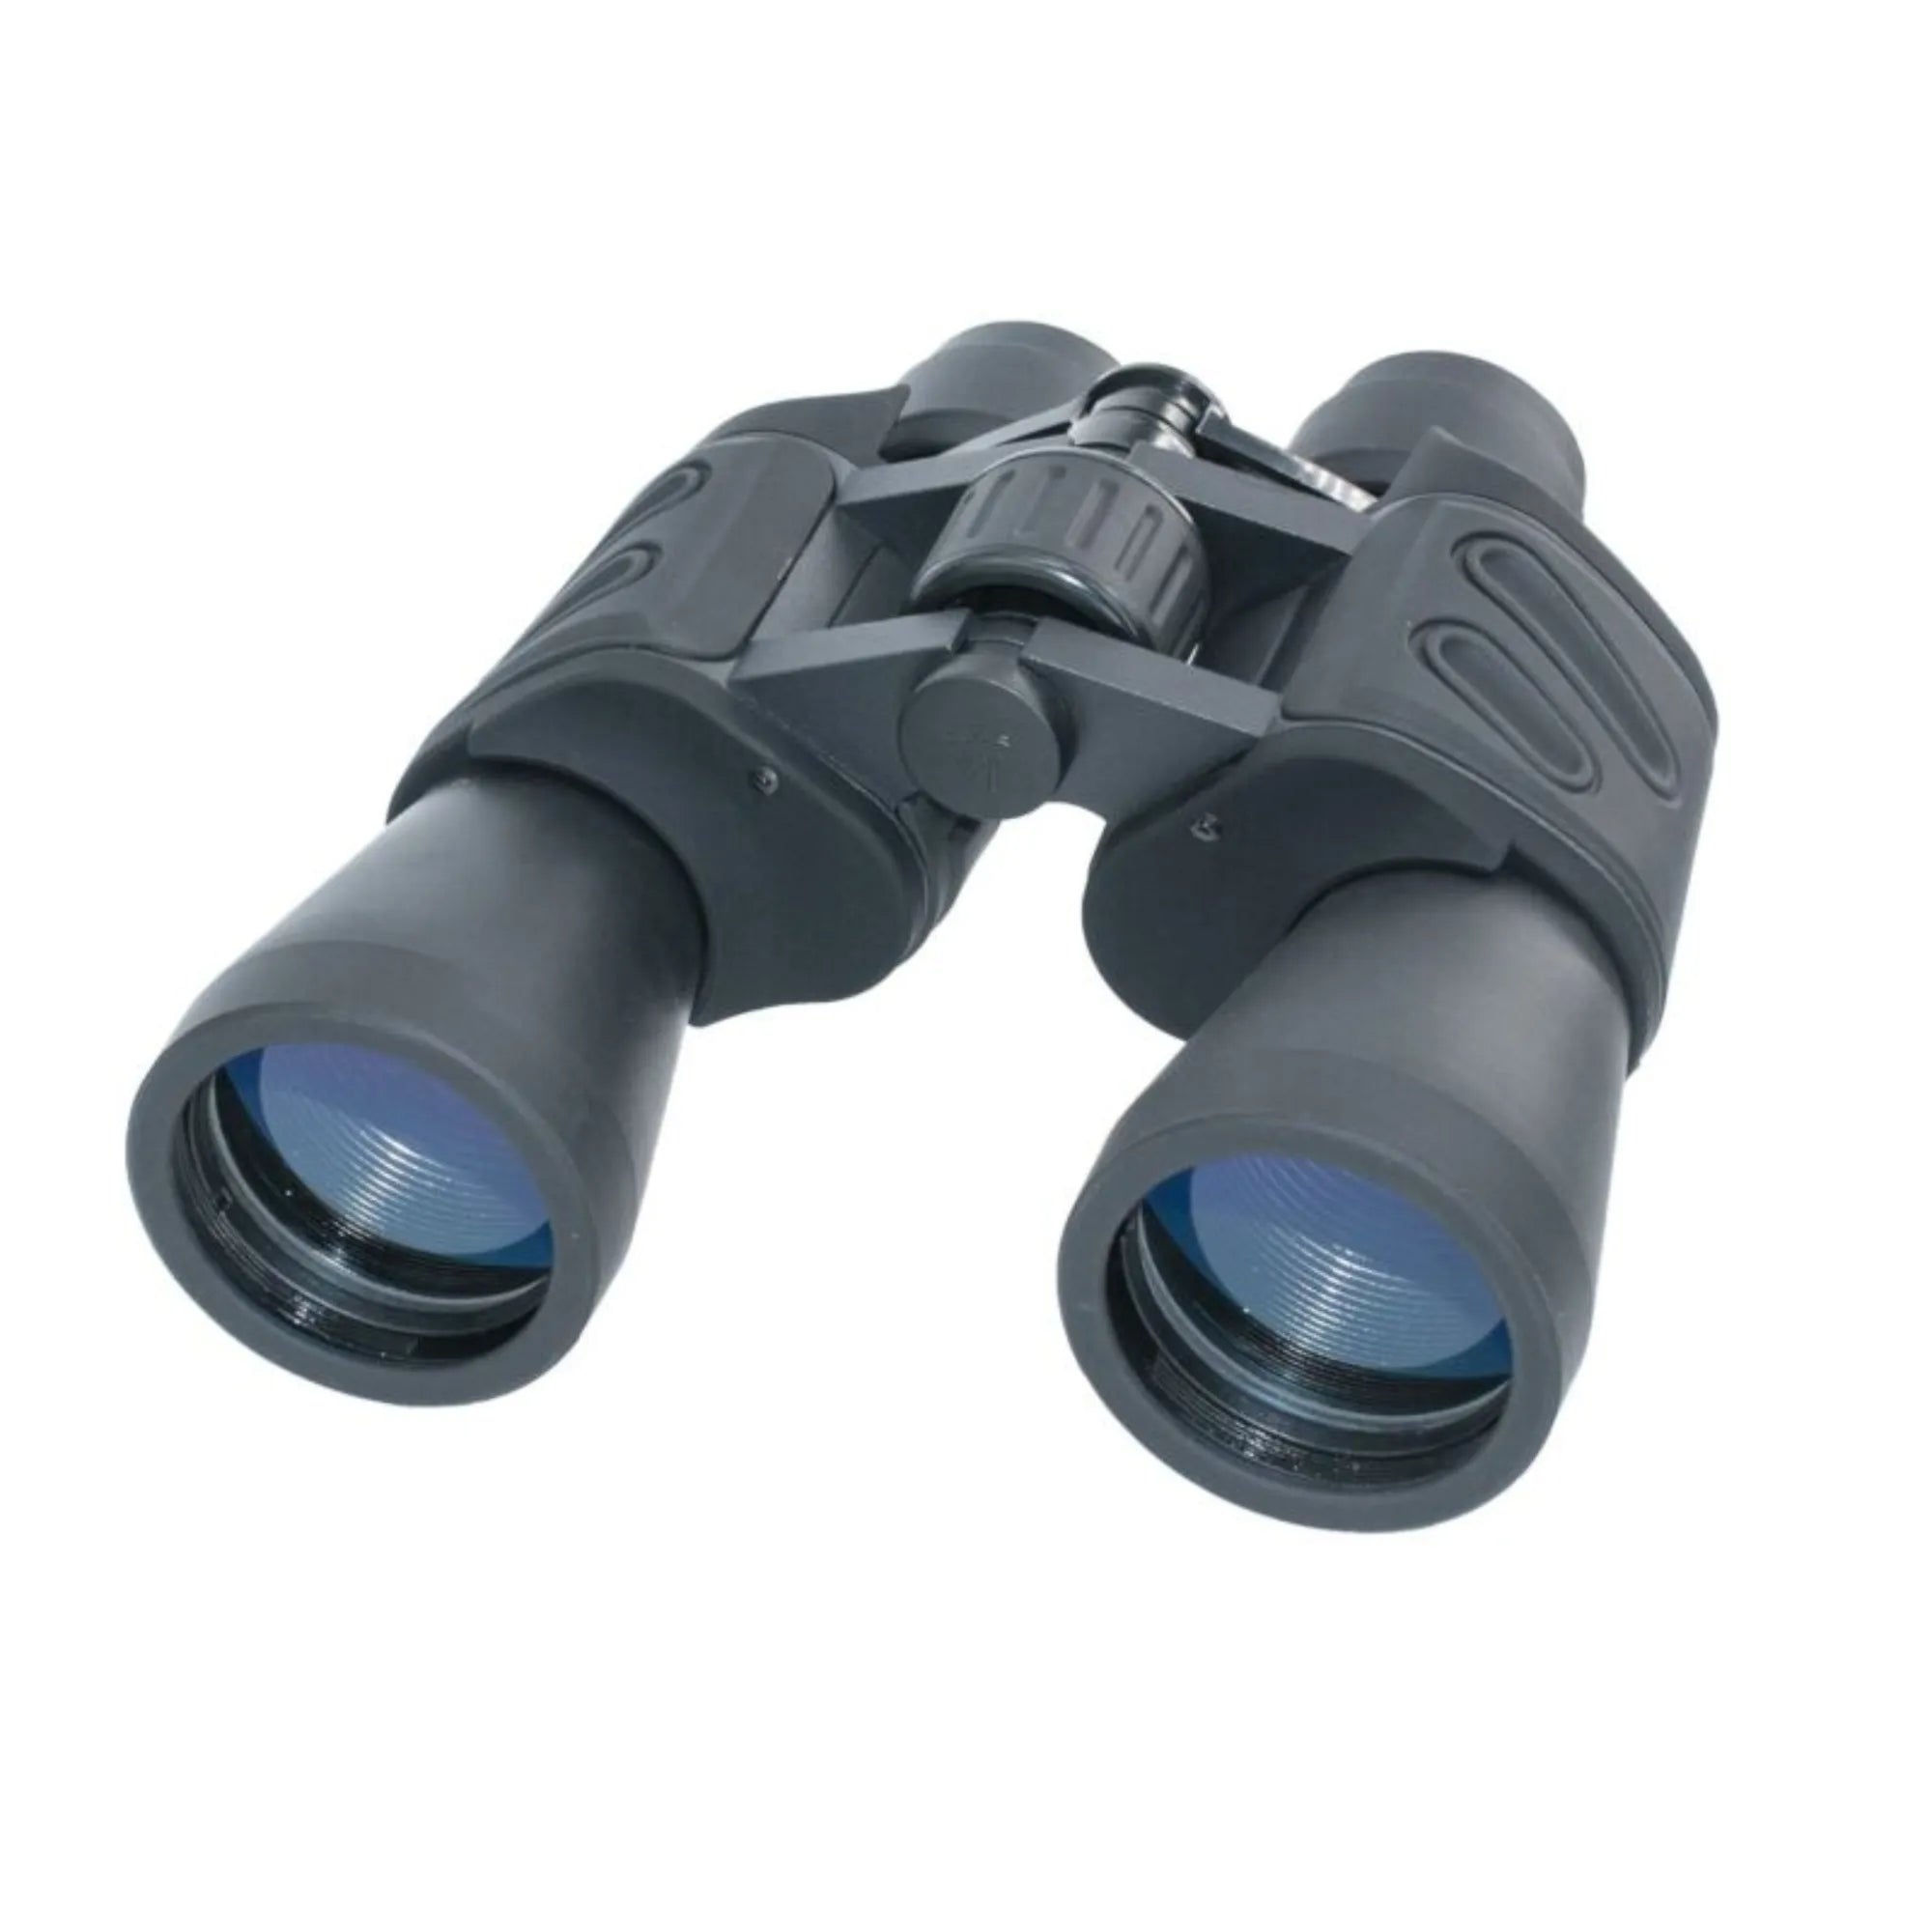 7 x 50 Central Focus Binoculars